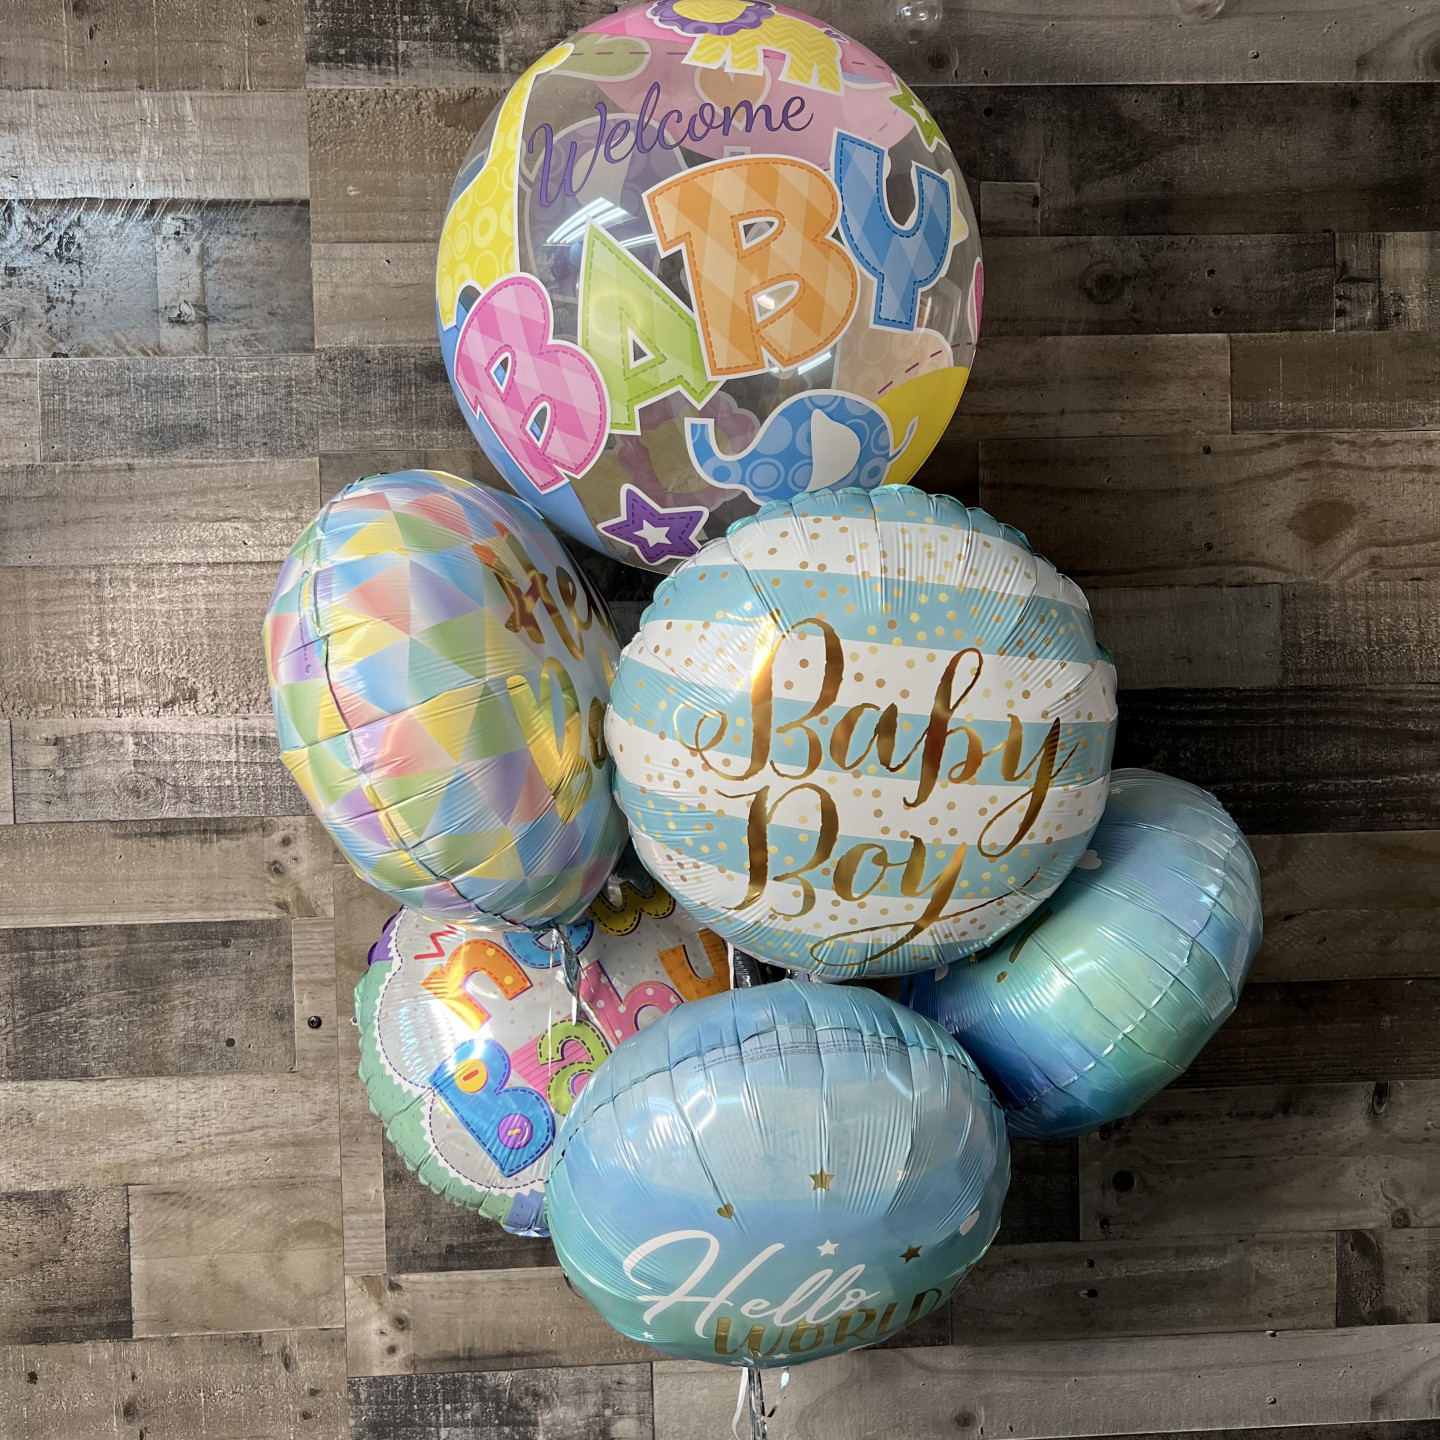 " Welcome Baby Boy " Balloon Bouquet 